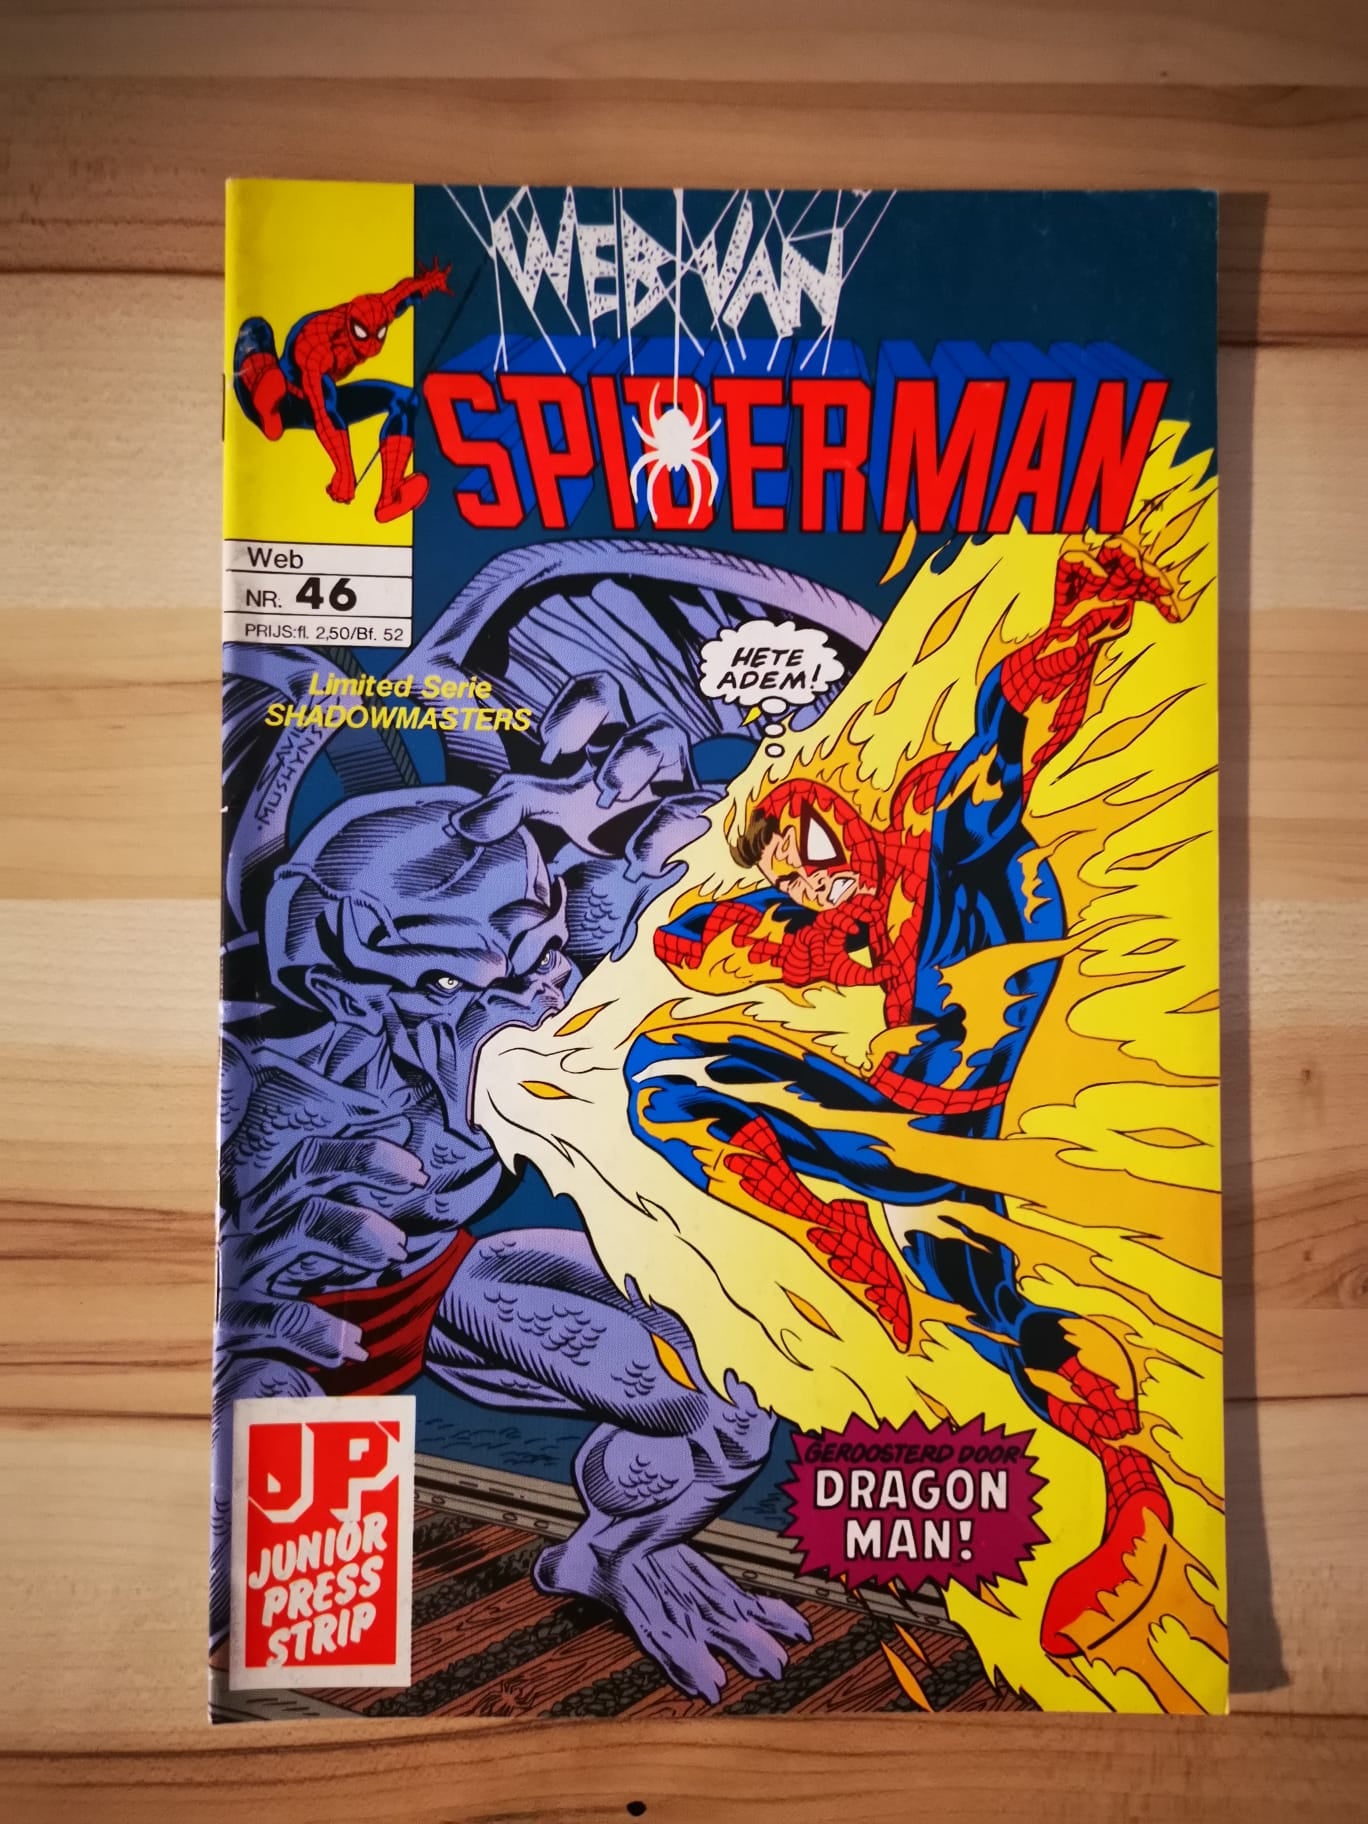 Web van spiderman #46